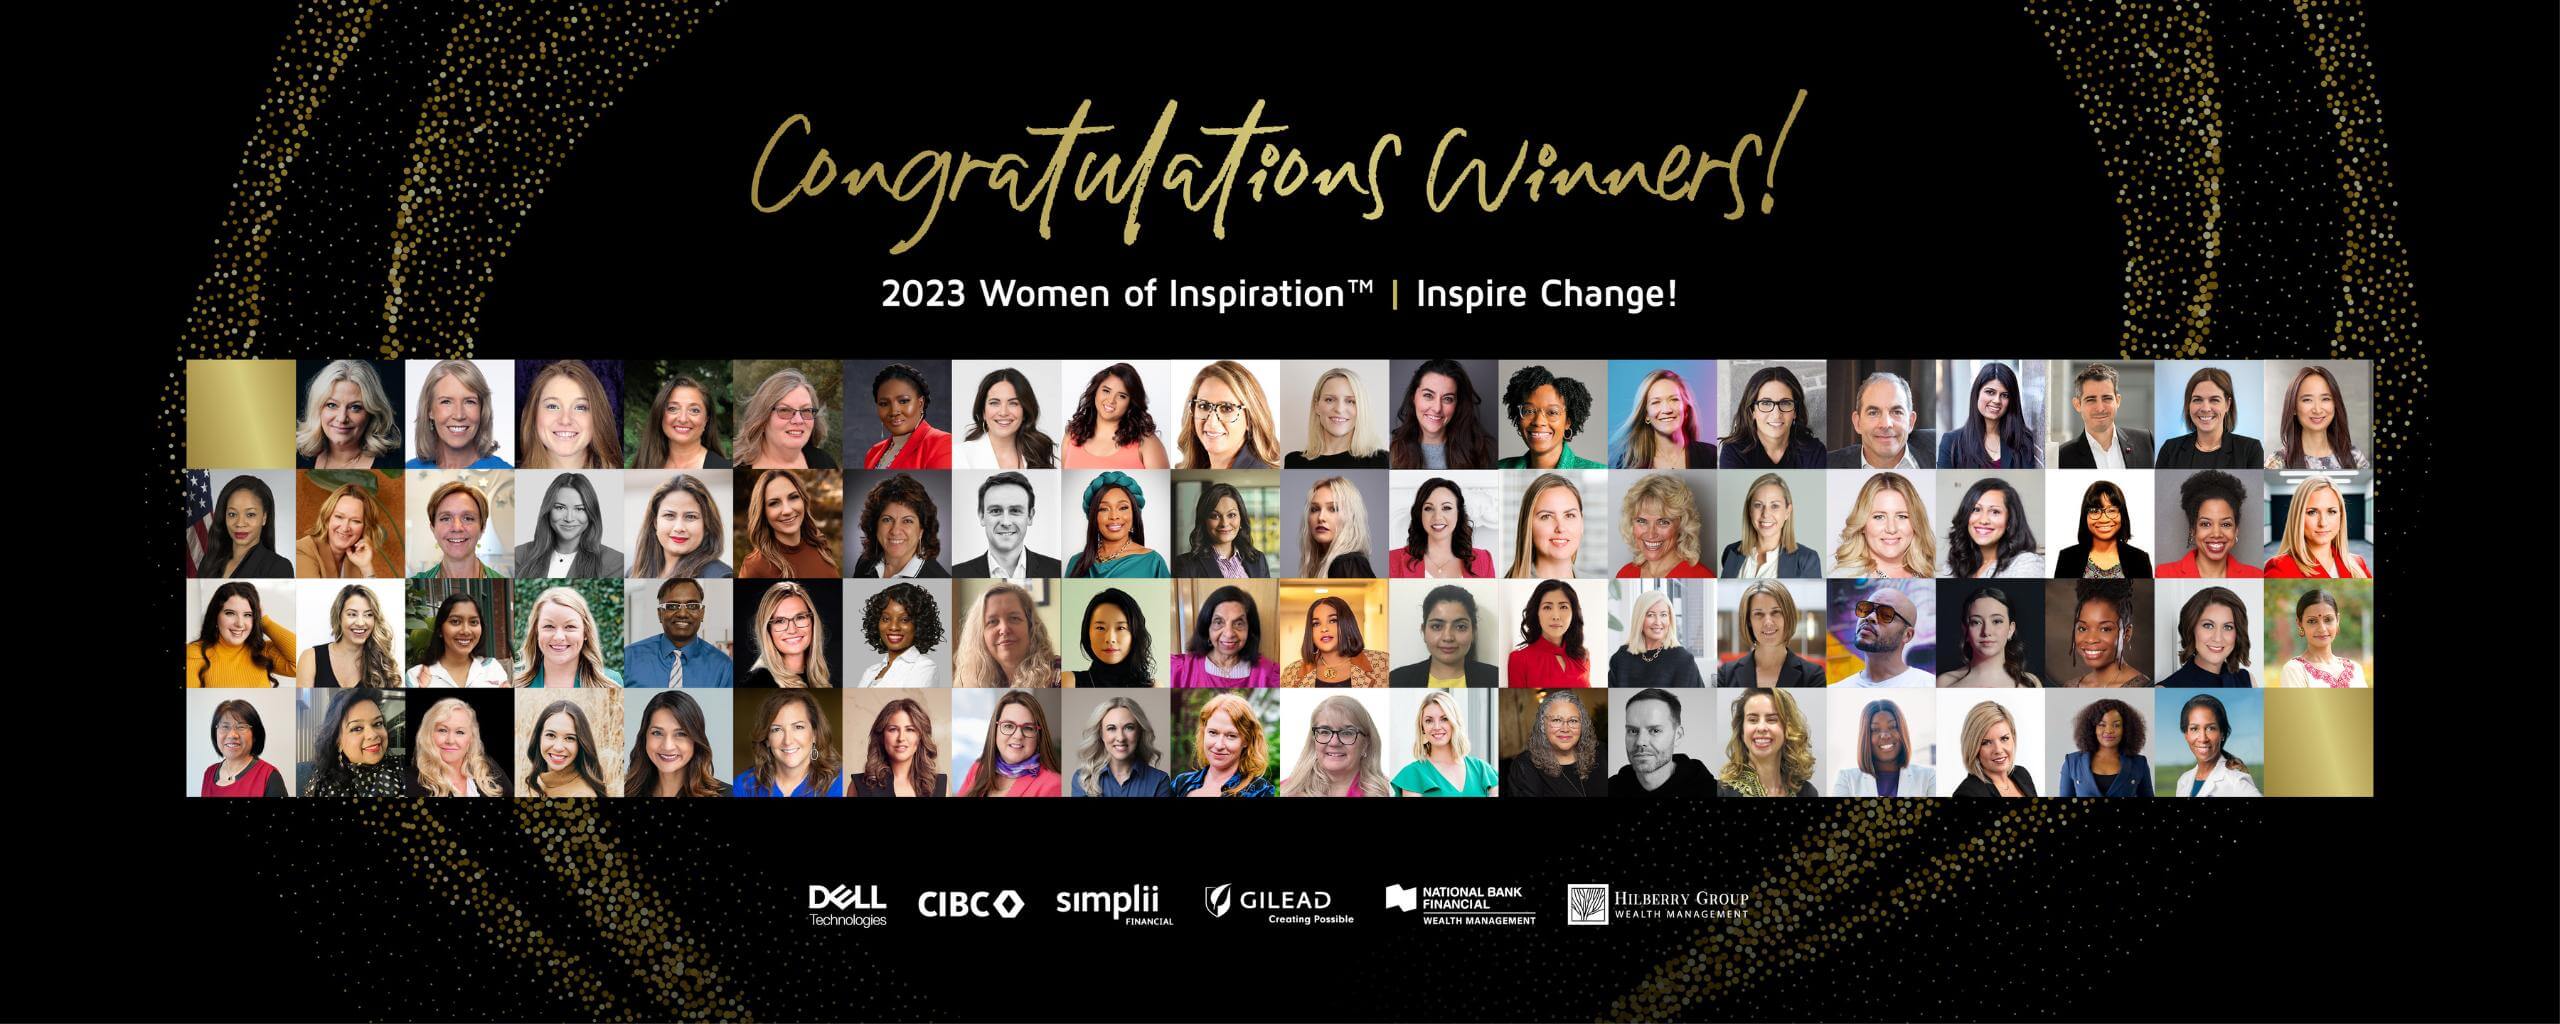 Women of inspiration 2023 image-Inspire-Change-Congratulations-Winners